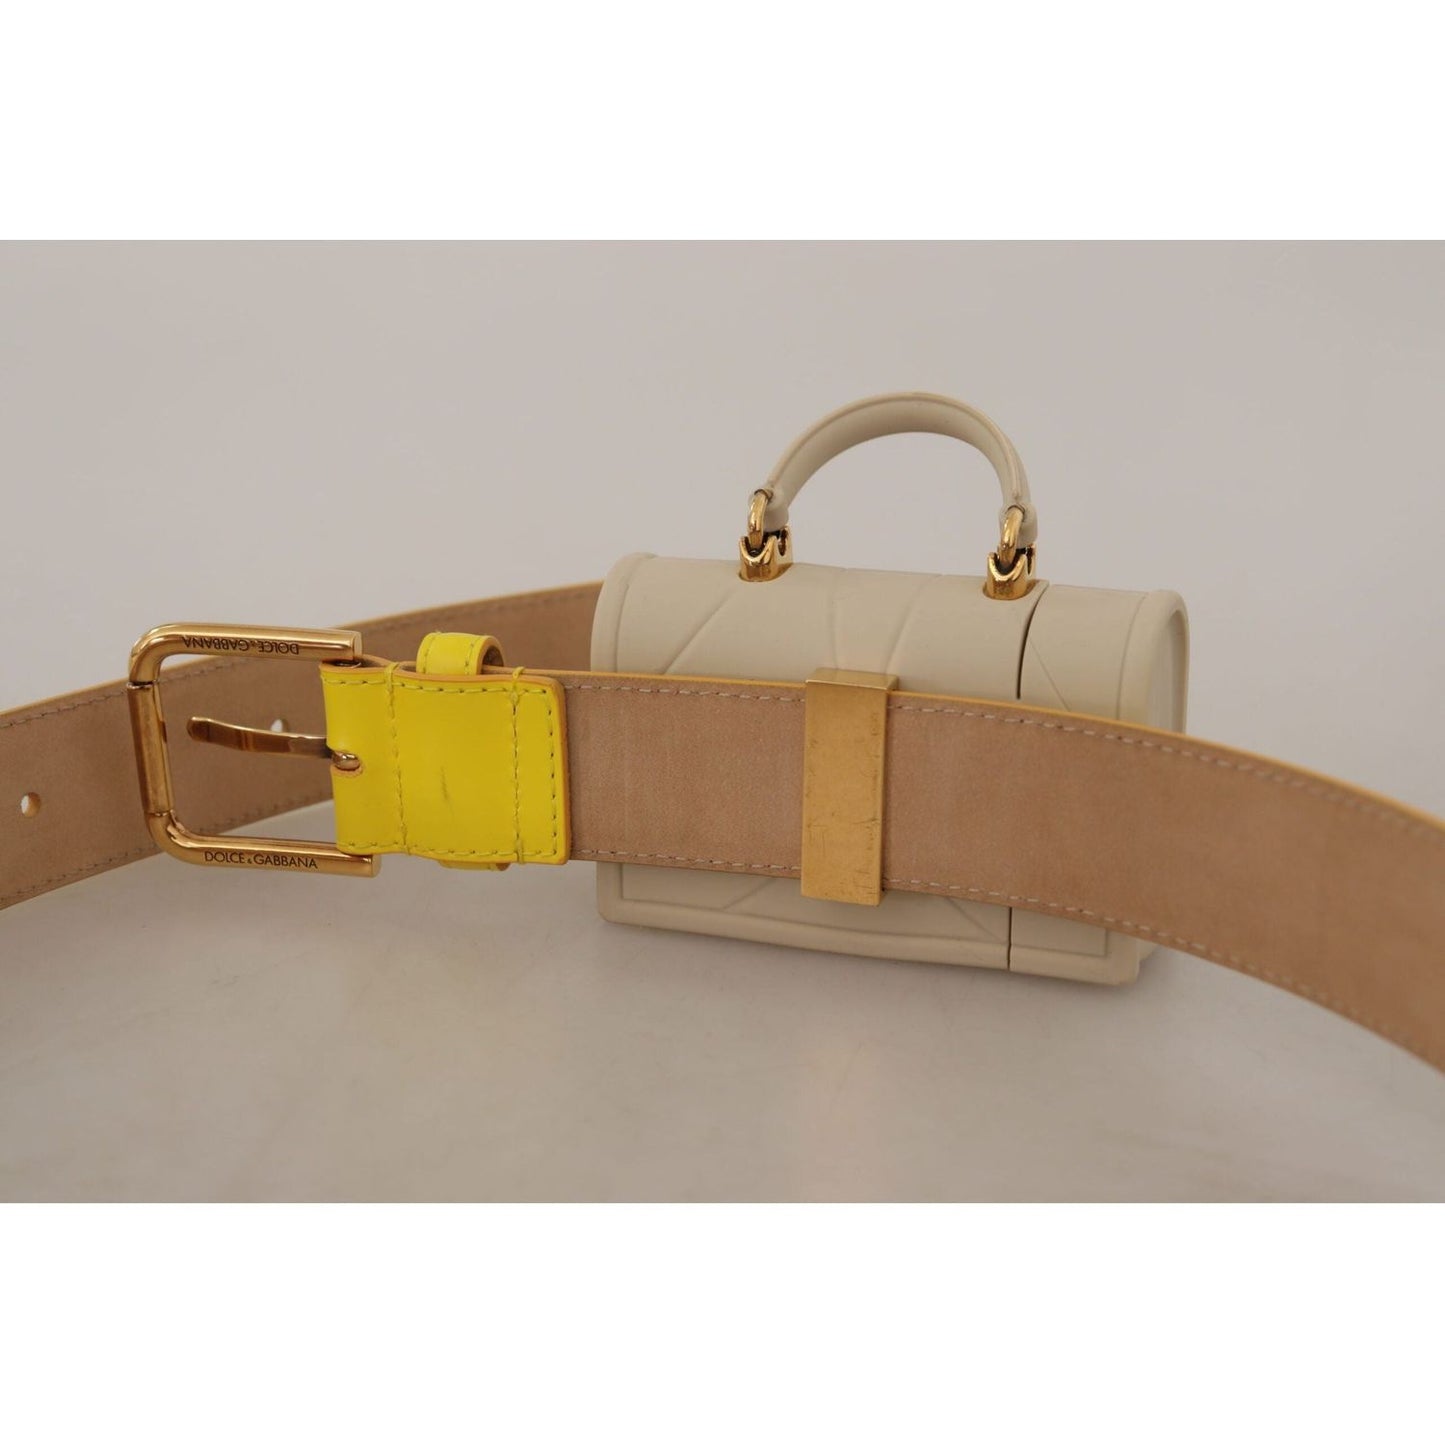 Dolce & Gabbana Chic Yellow Leather Belt with Headphone Case yellow-leather-devotion-heart-micro-bag-headphones-belt IMG_8655-1-scaled-c9e21c08-8e5.jpg